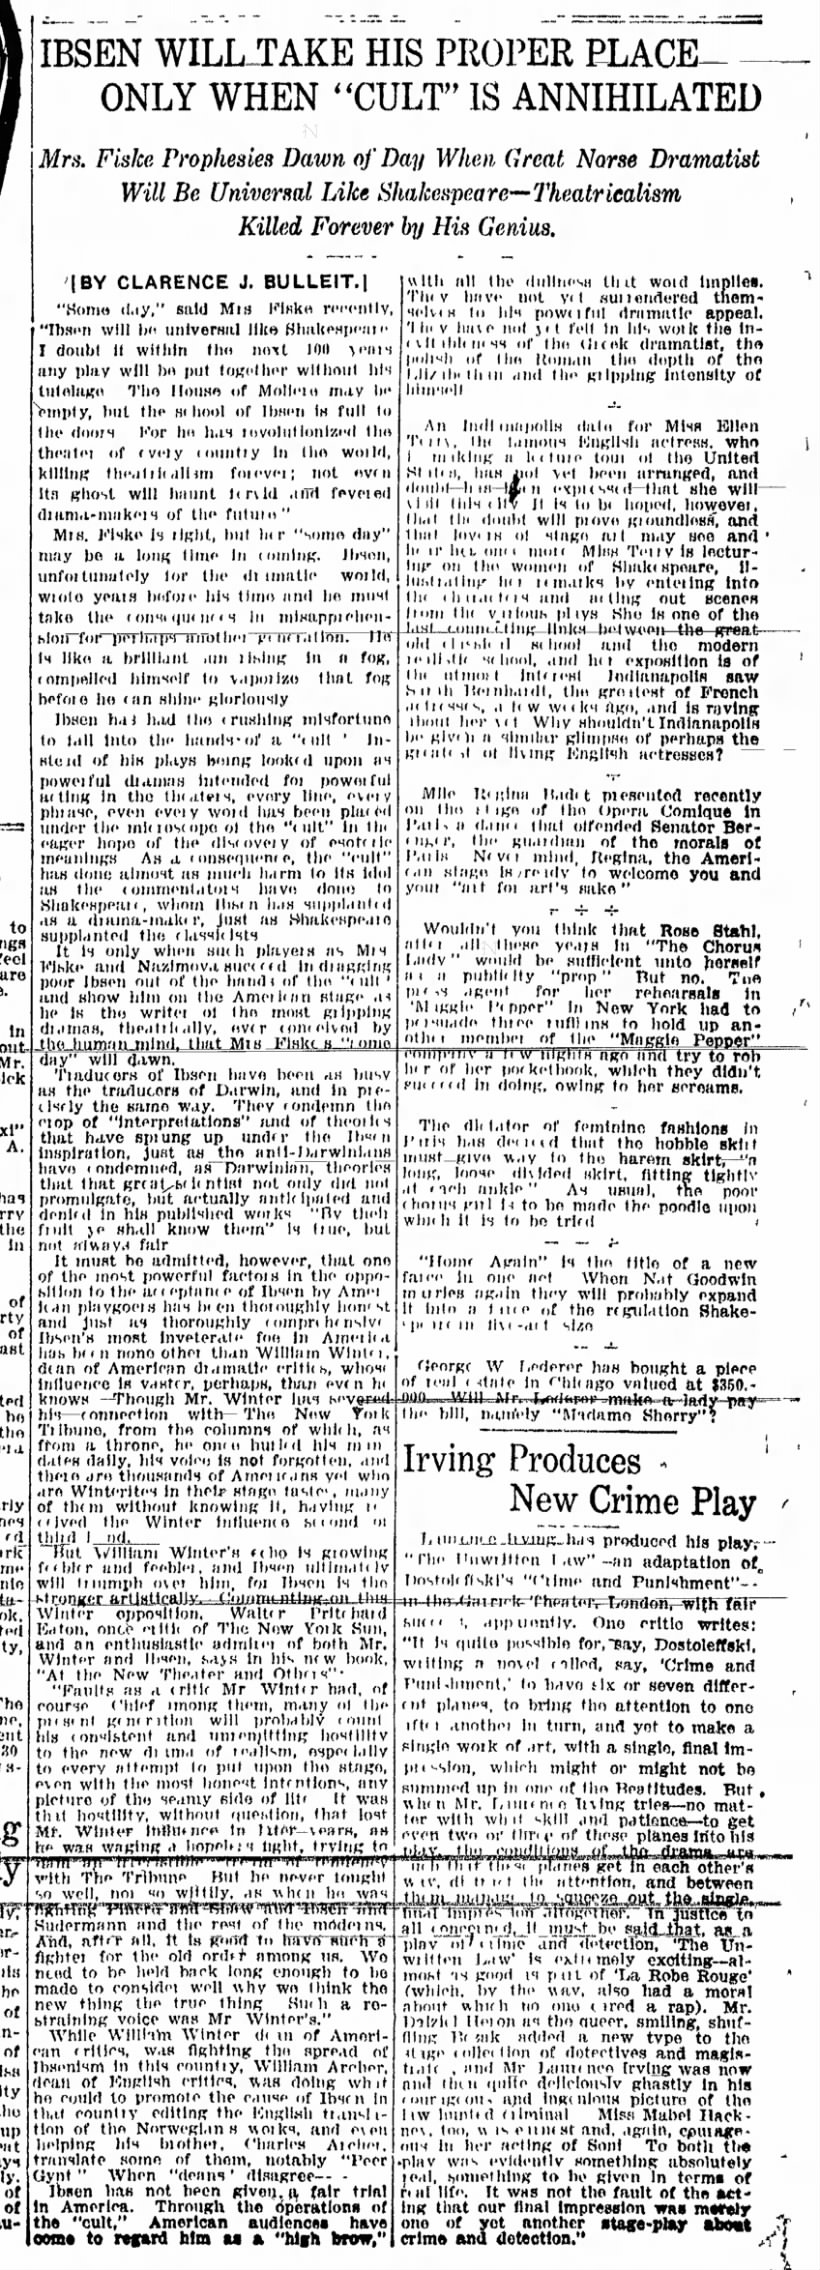 CJ Bulleit, 15 Jan 1911, Indianapolis Star, p29